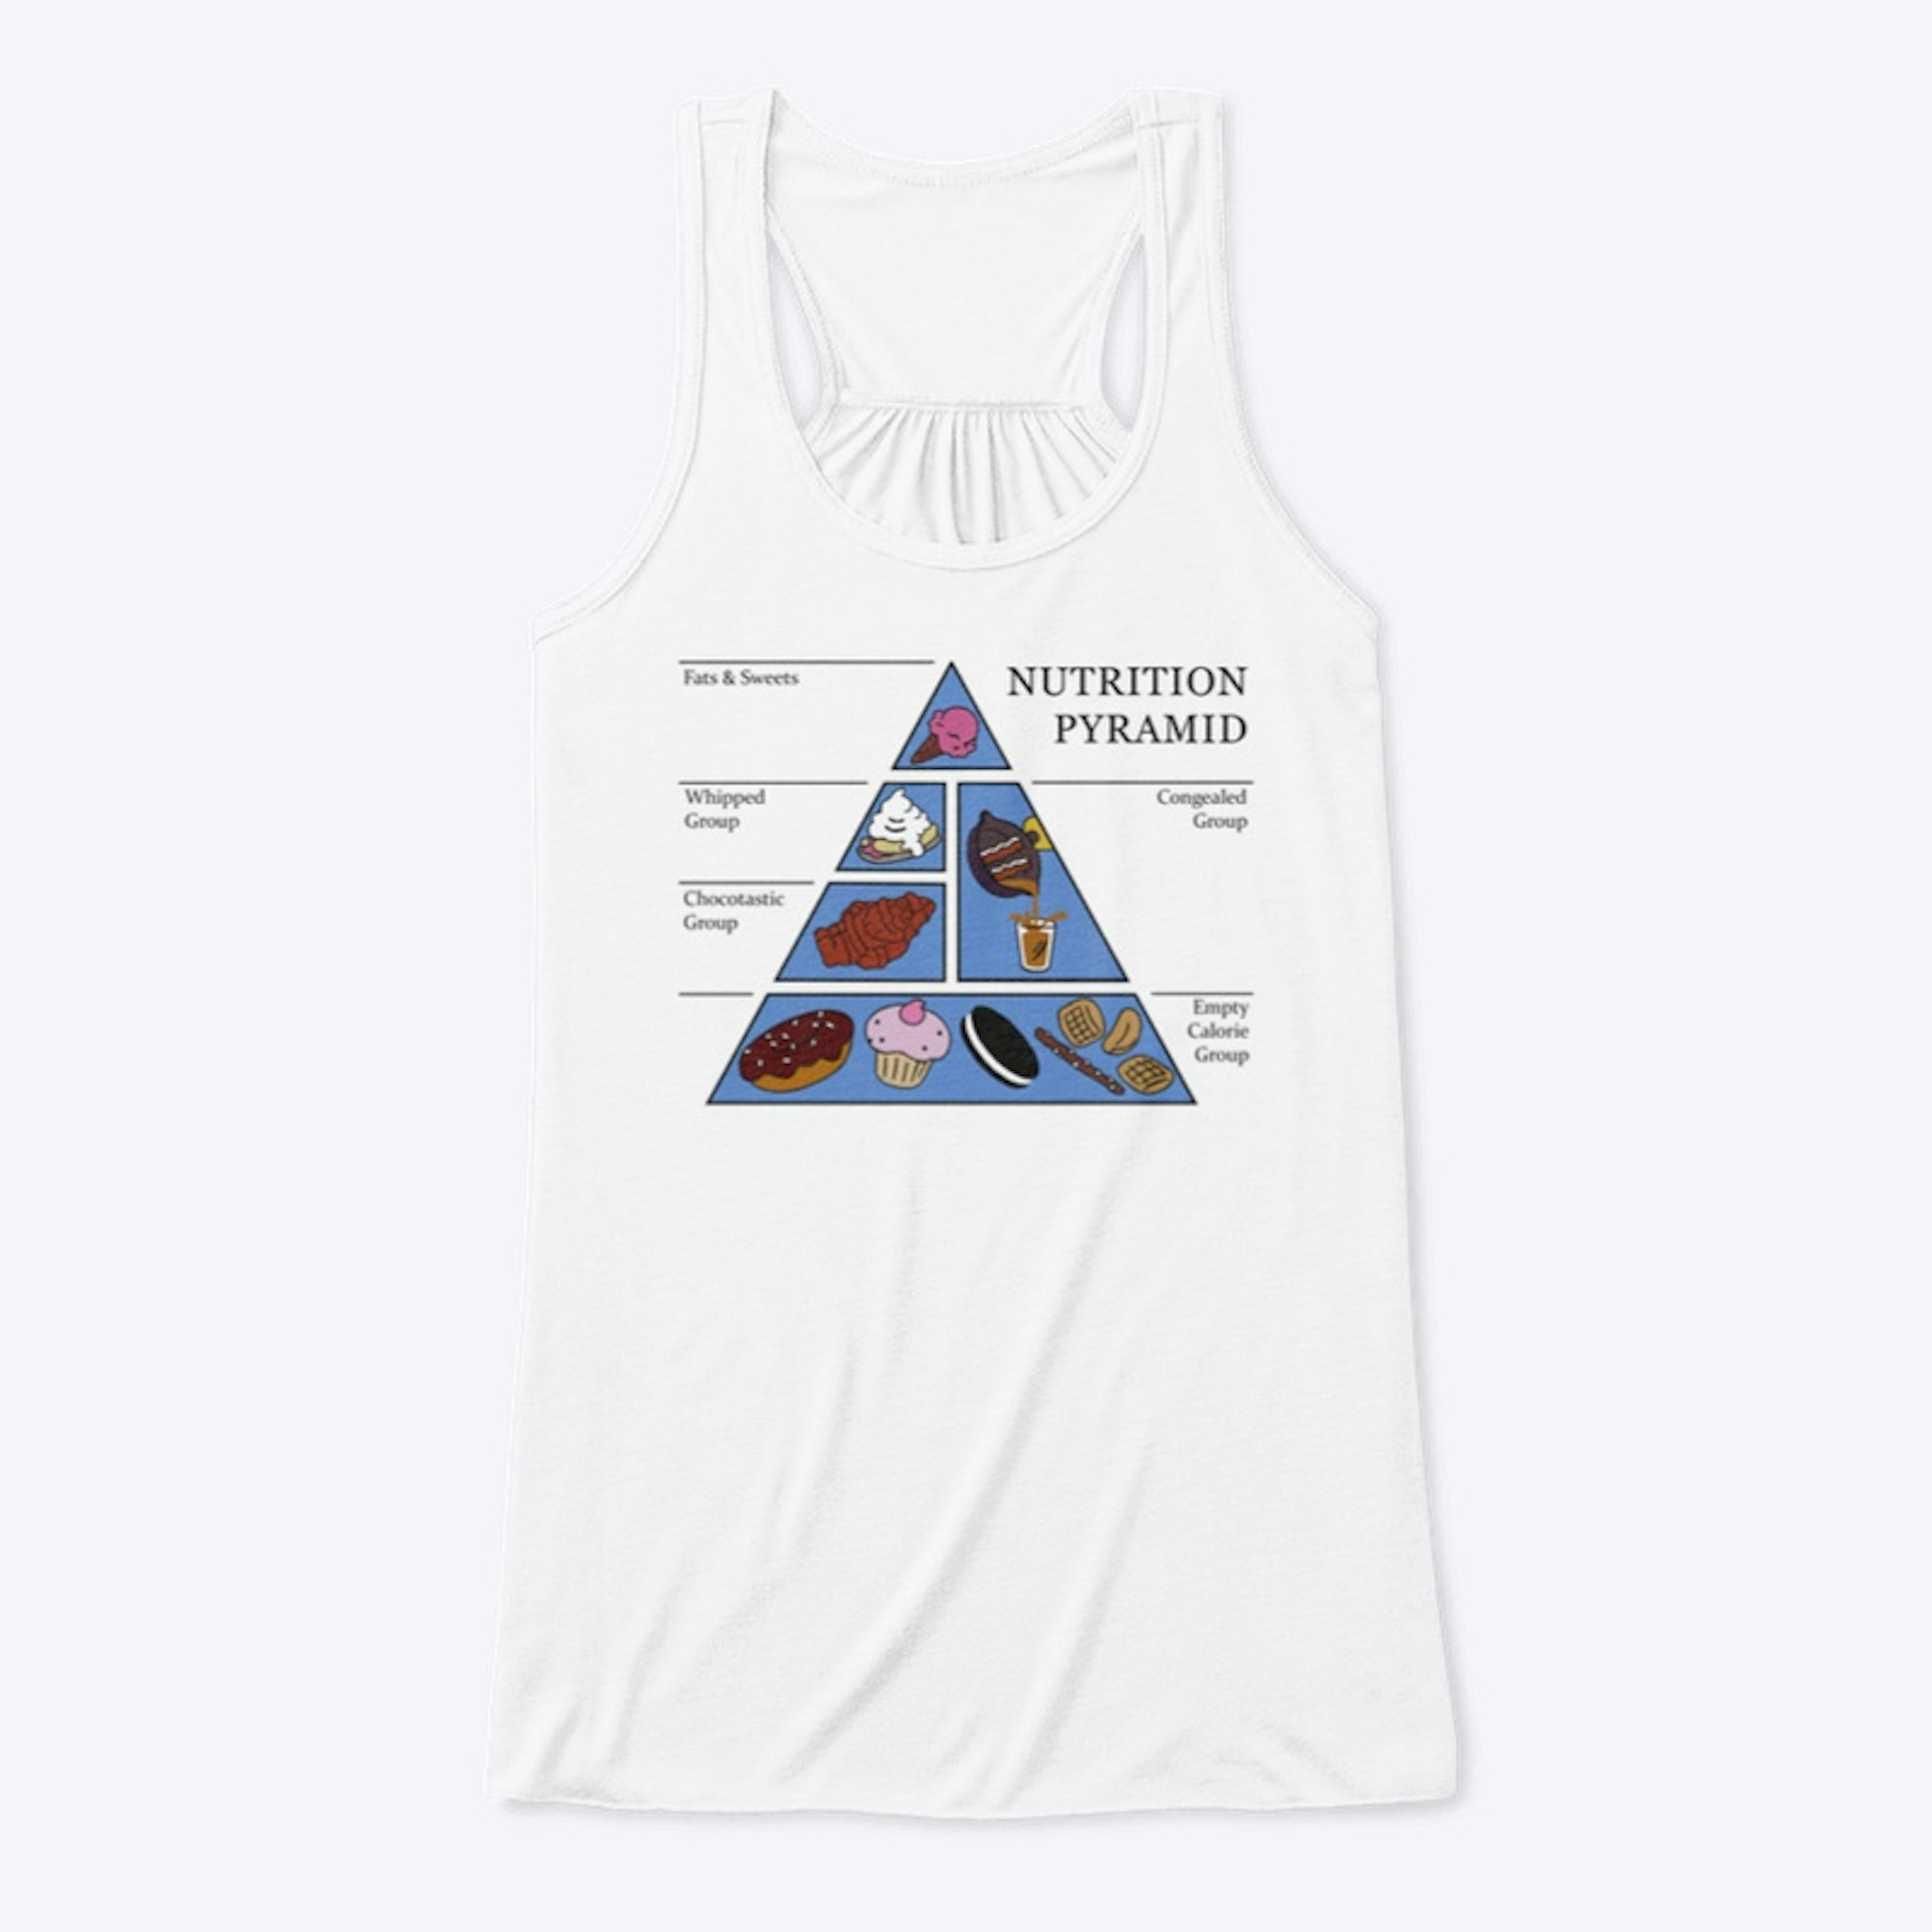 The Nutrition Pyramid